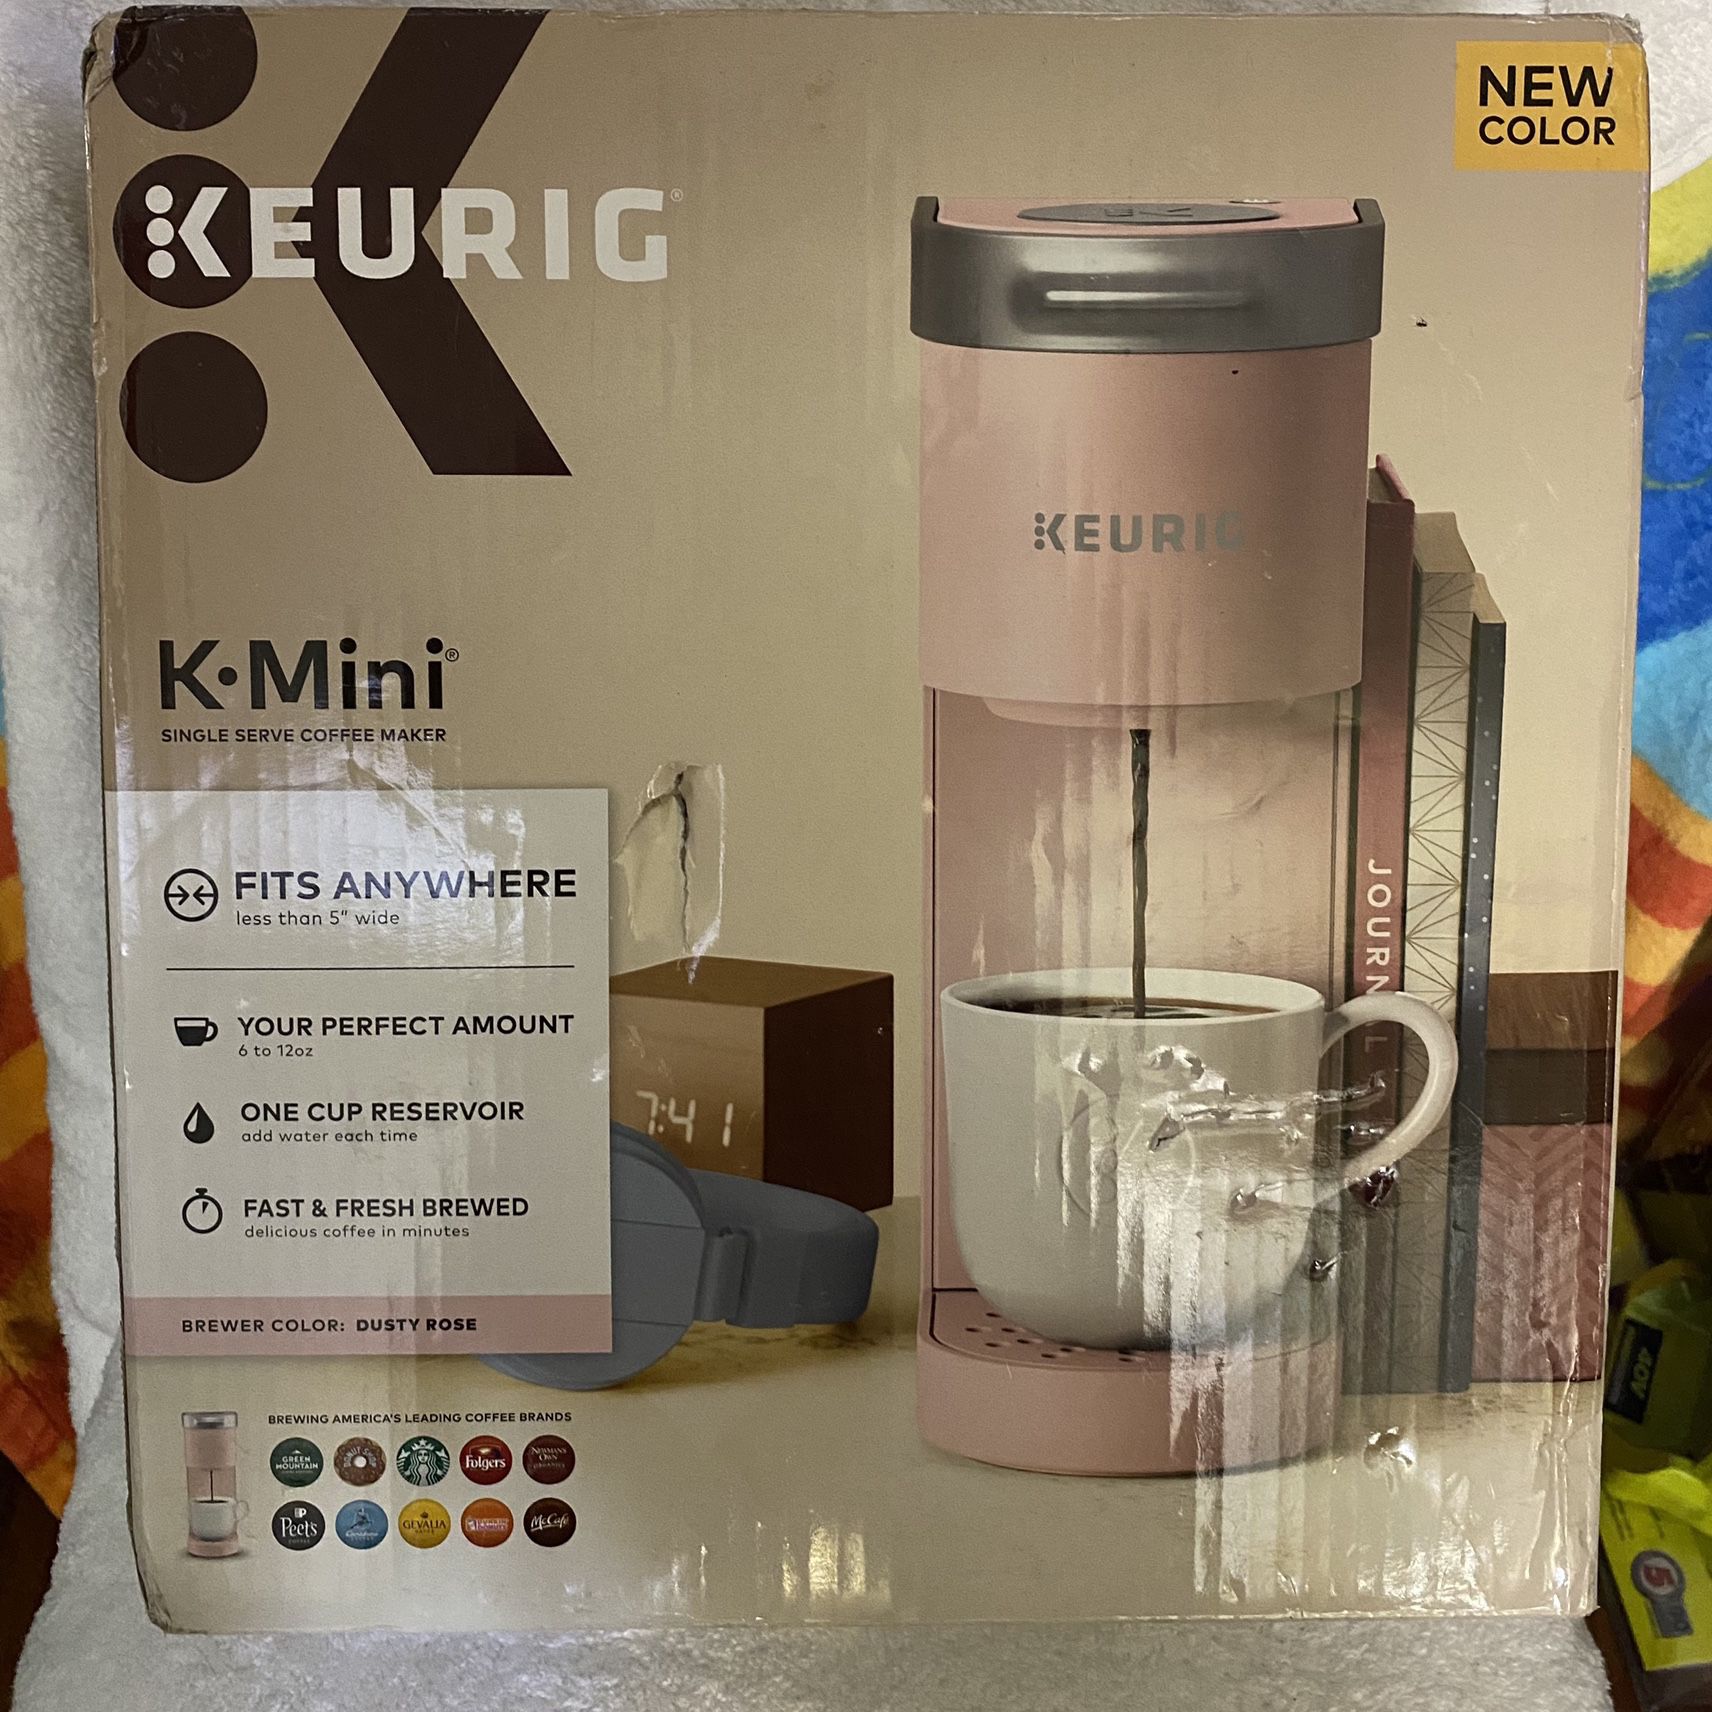 Keurig K-Mini Single Serve K-Cup Pod Coffee Maker, Dusty Rose Pink